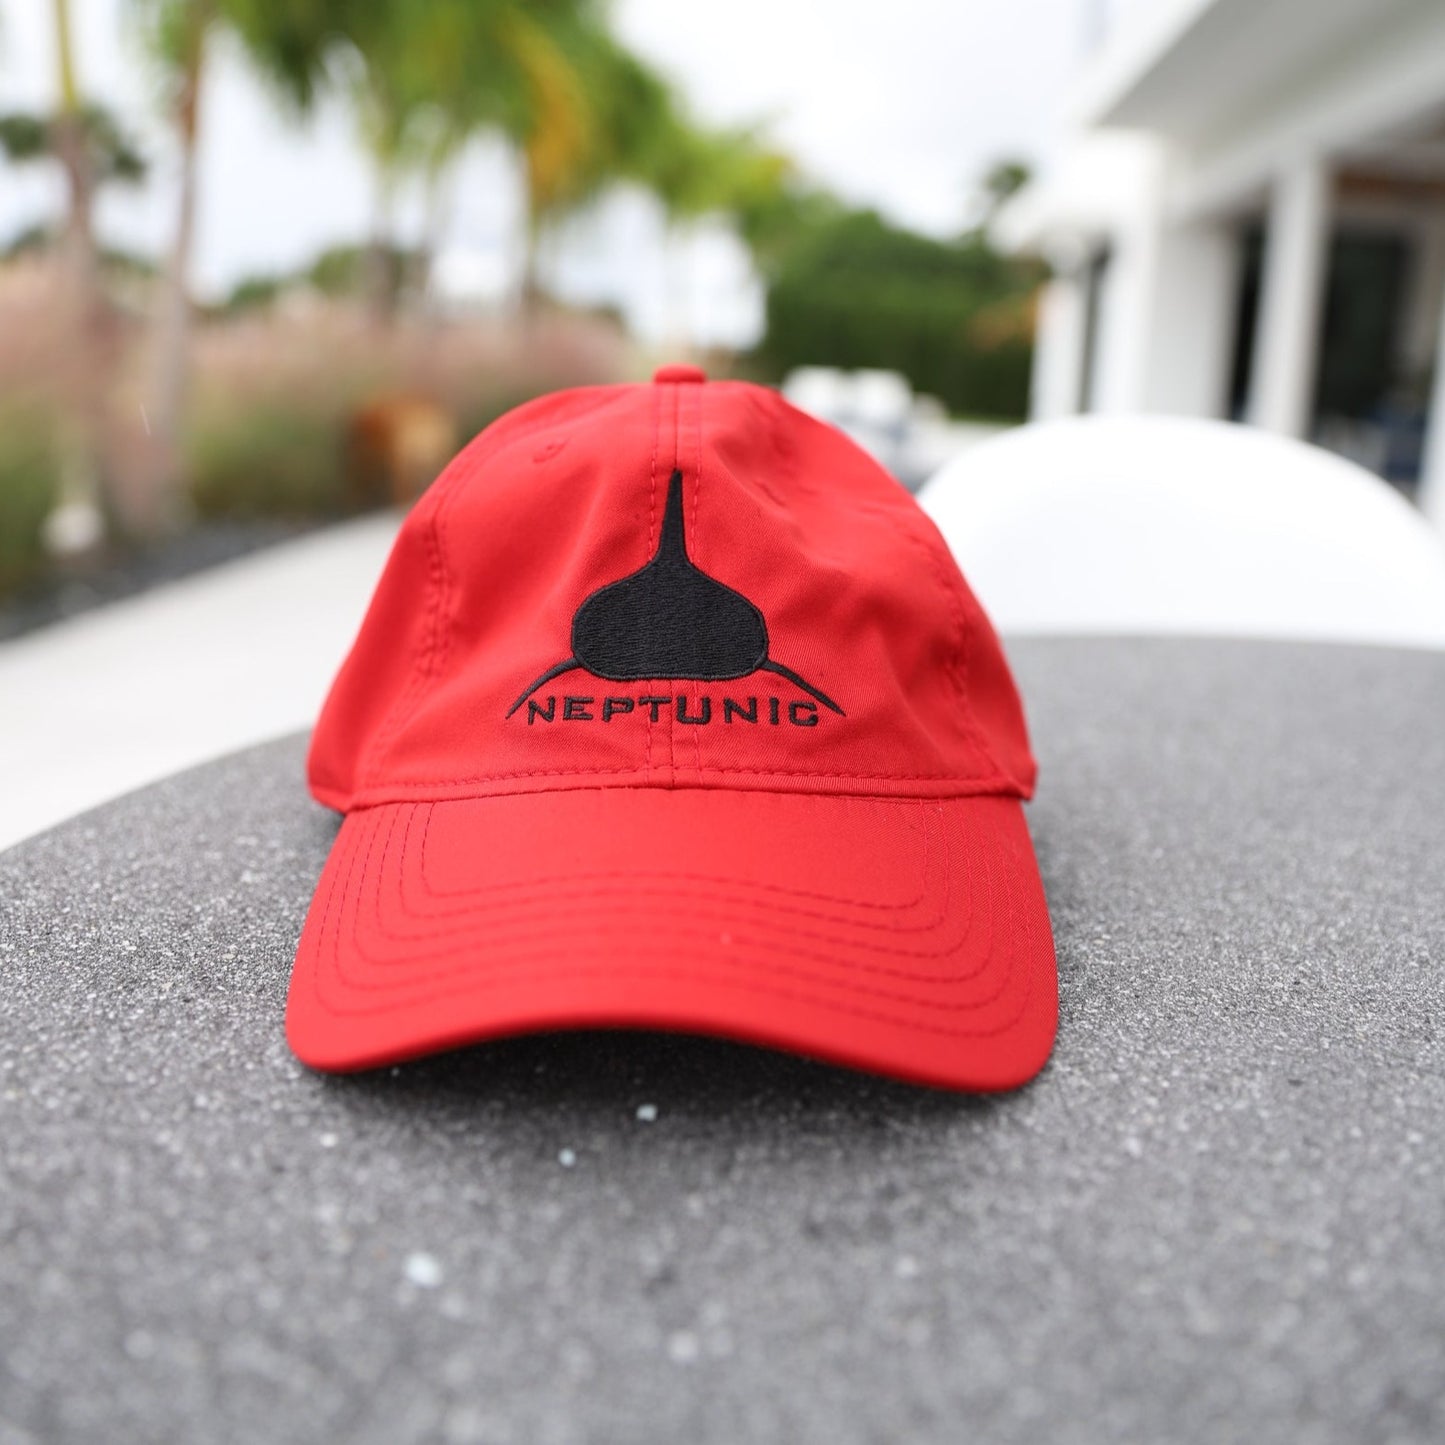 Neptunic University Cool Fit Hat - Red/Black